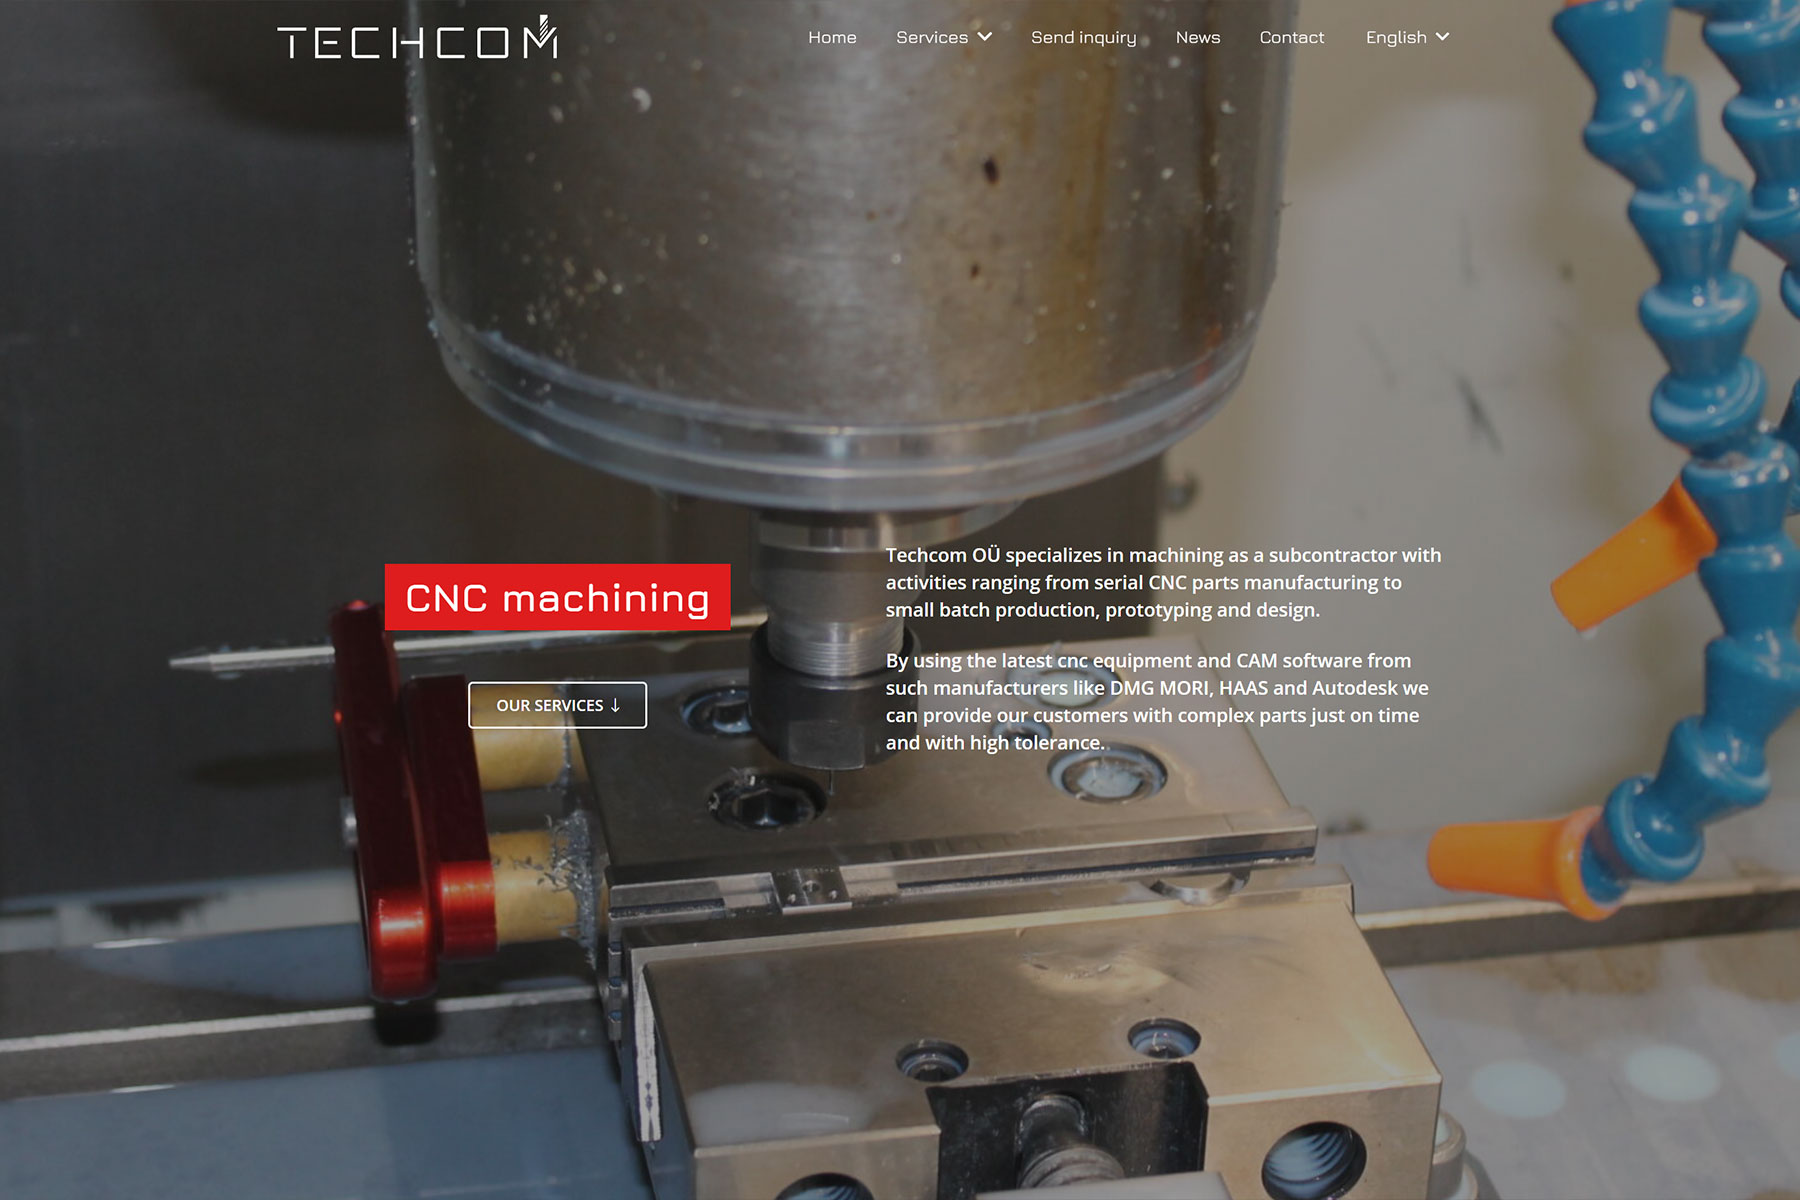 New CNC machining website announcement